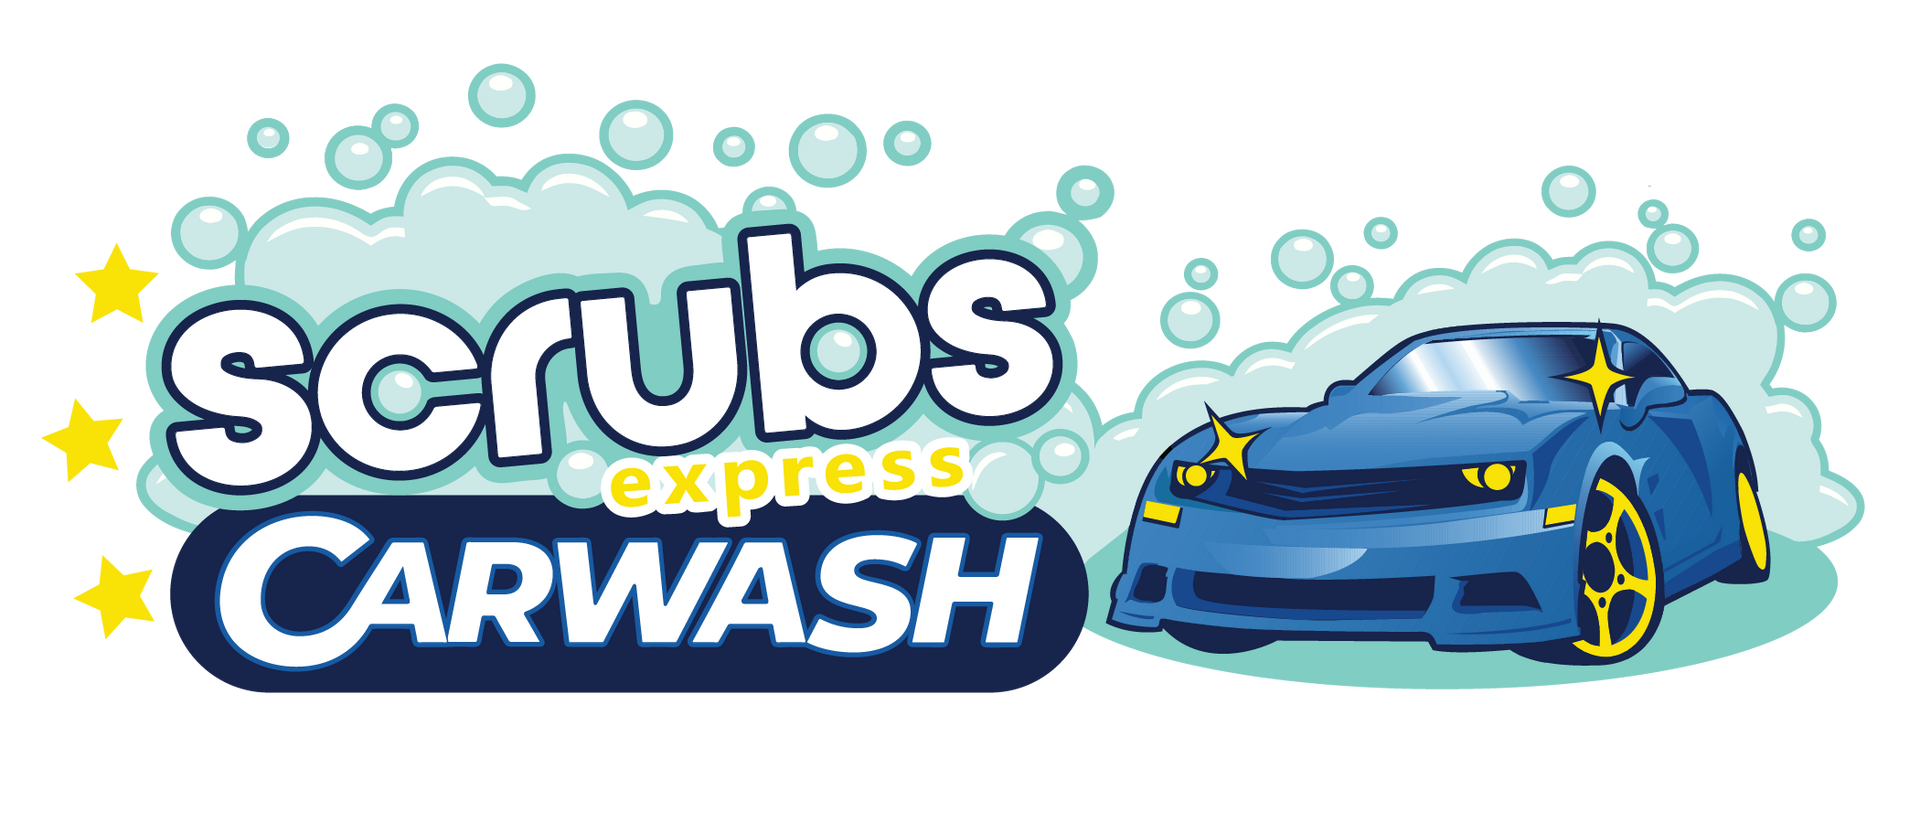 Scrubs Express Car Wash in Atlanta, Georgia logo